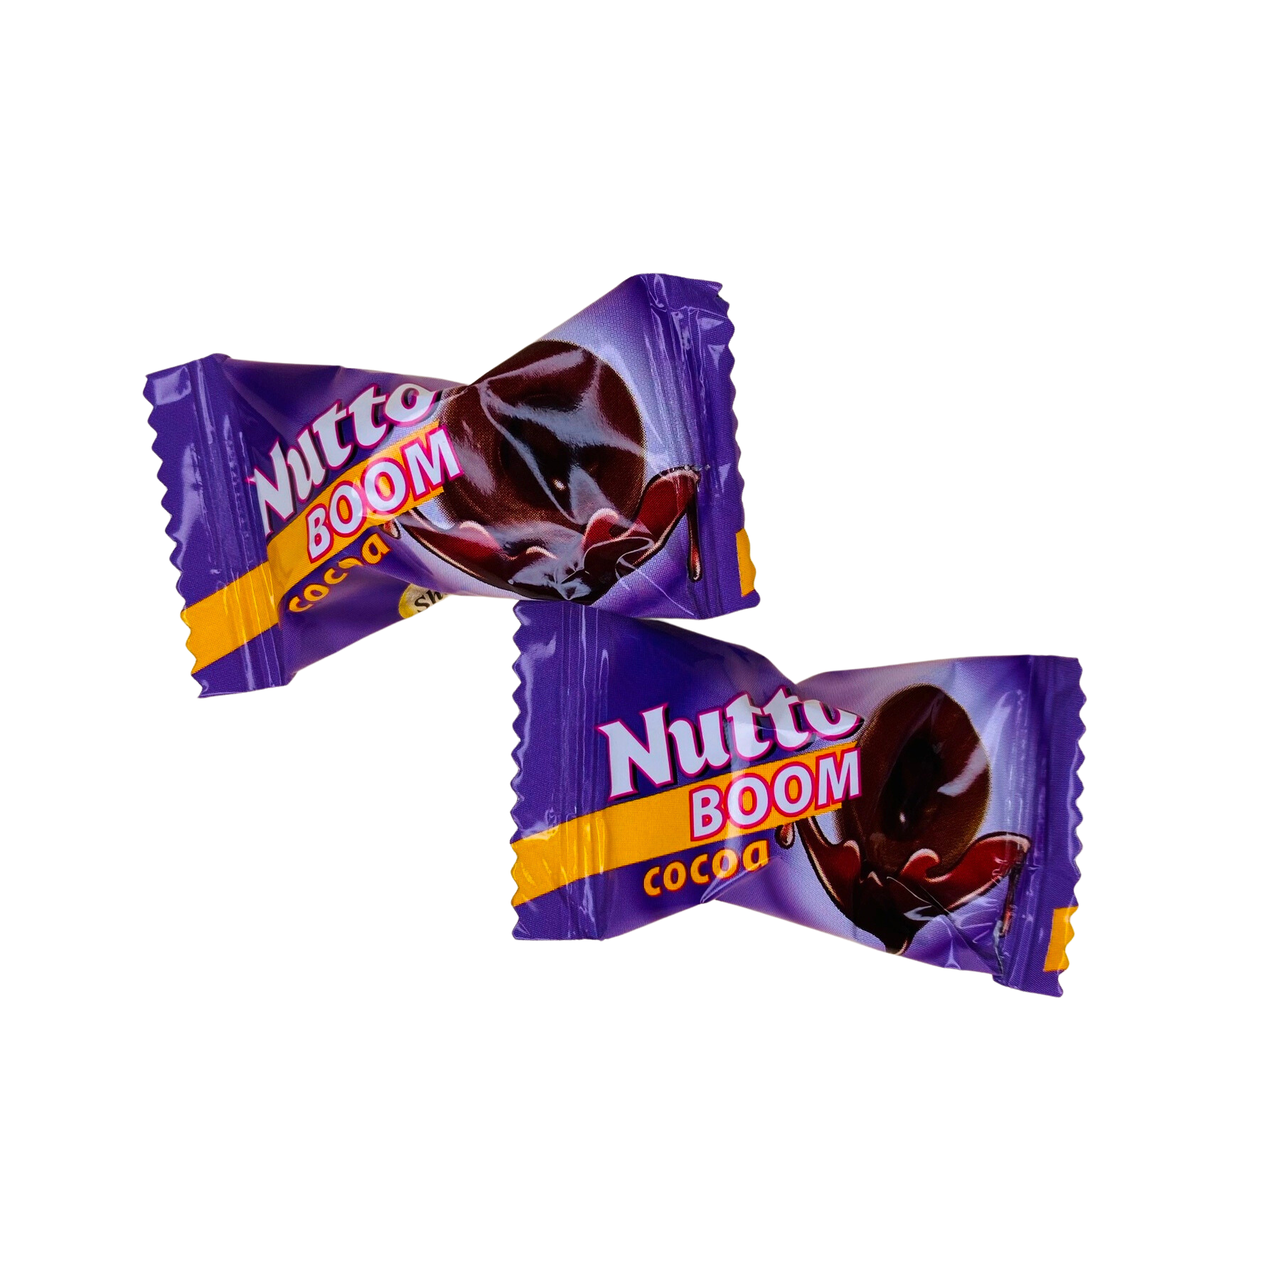 Цукерки Nutto Boom cocoa 1,4 кг. ТМ Шоколадно